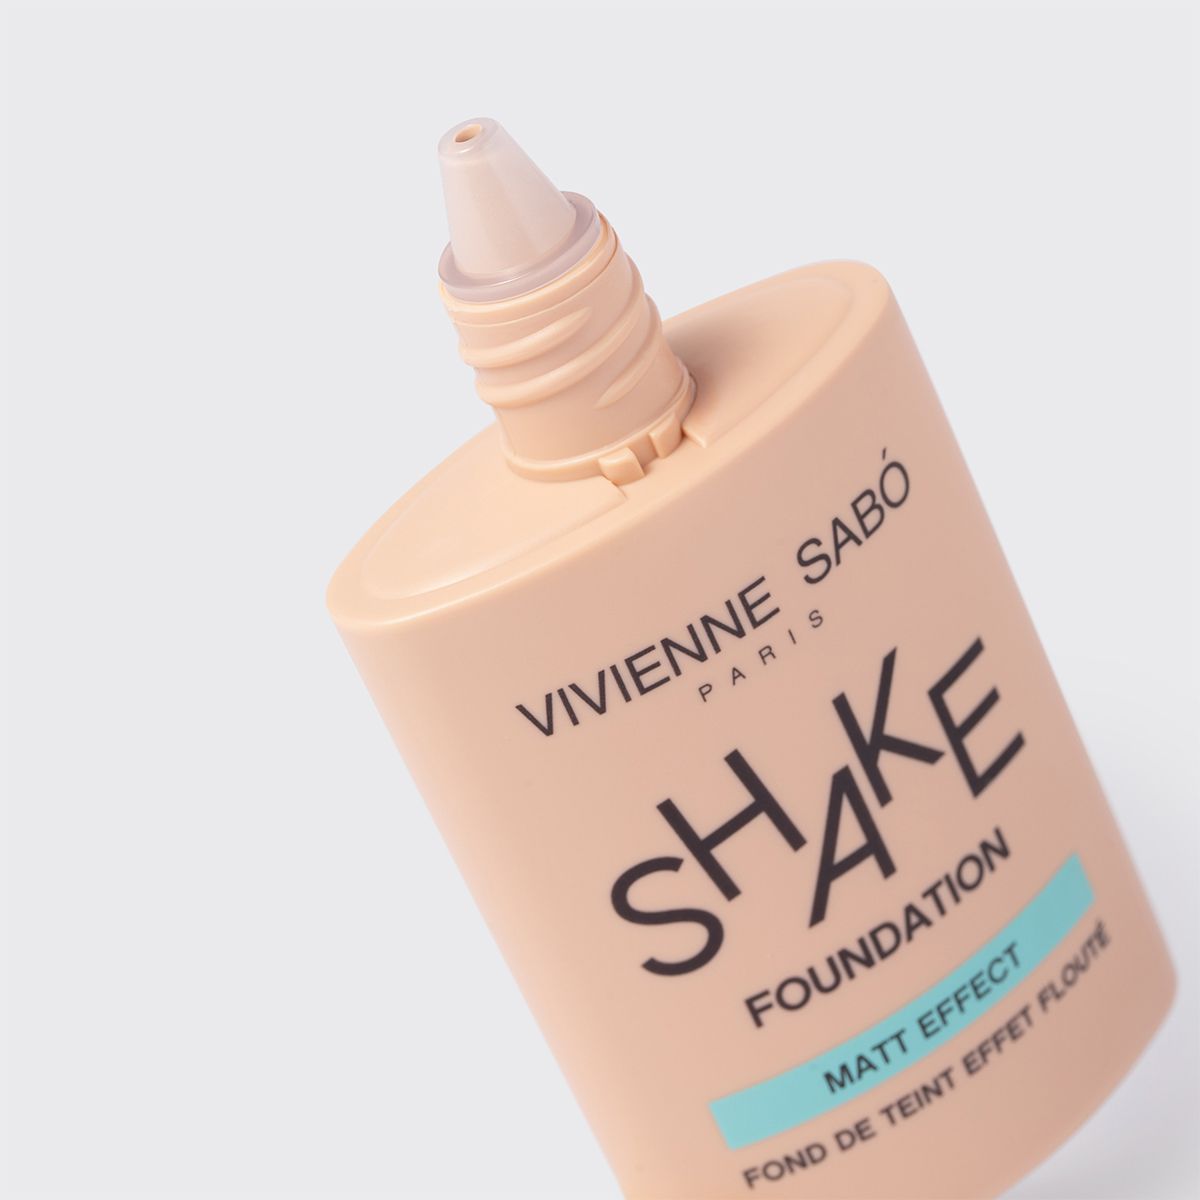 Shakefoundation matt от магазина Vivienne Sabo